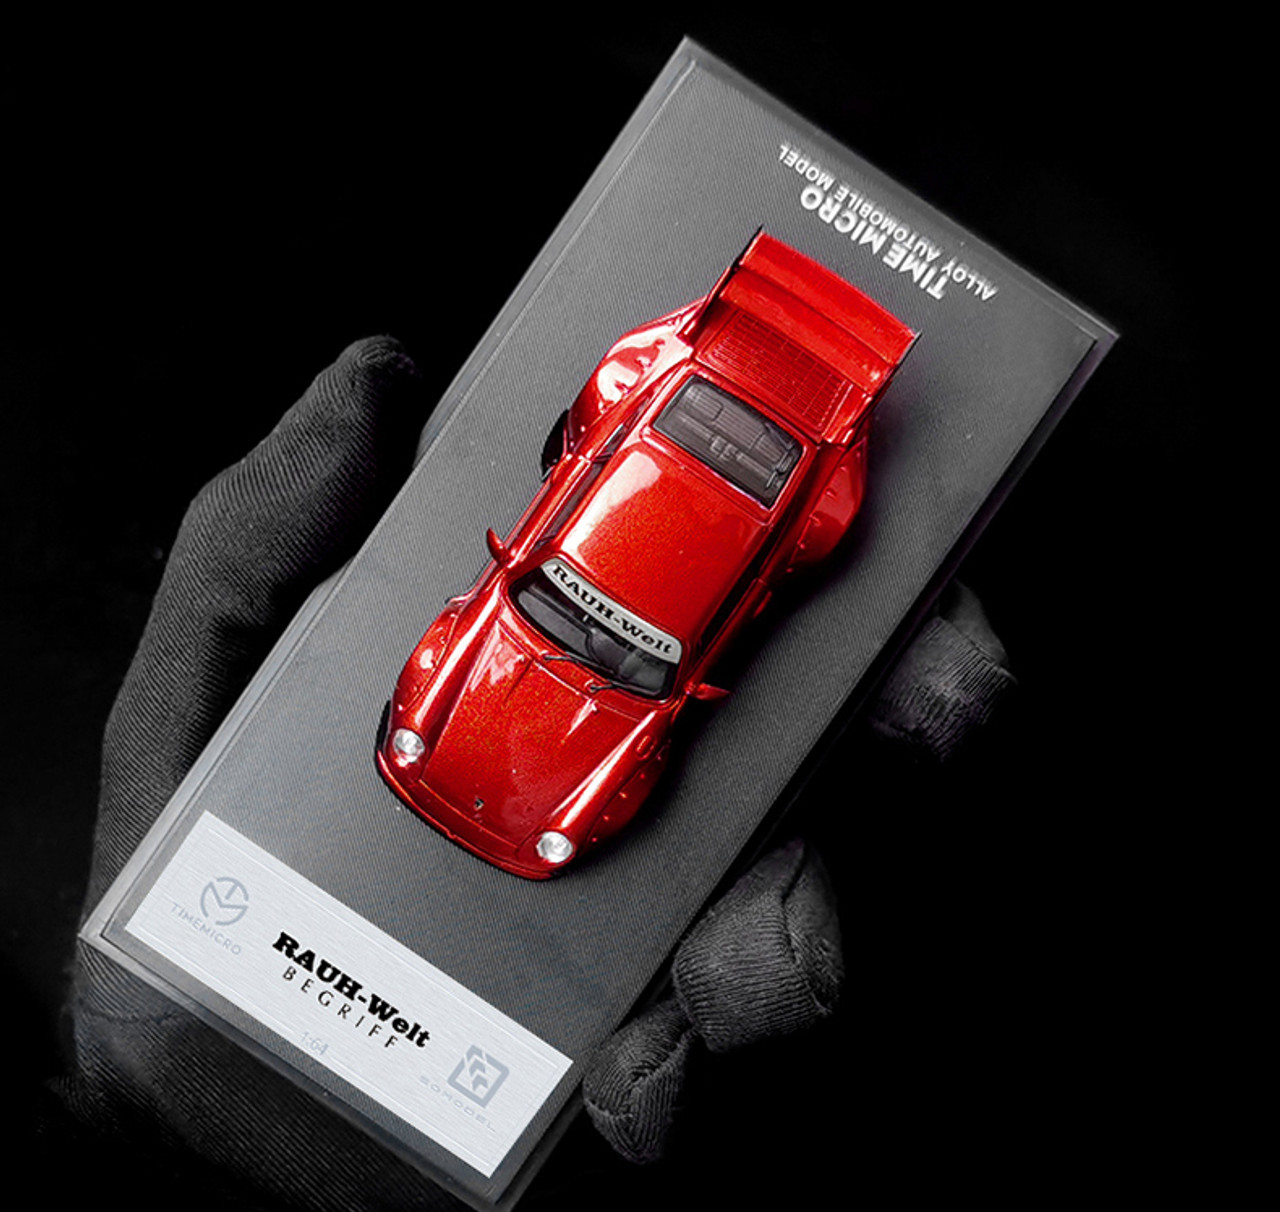 1/64 Time Model Porsche 911 993 RWB (Red) High Rear Wing Diecast Car Model